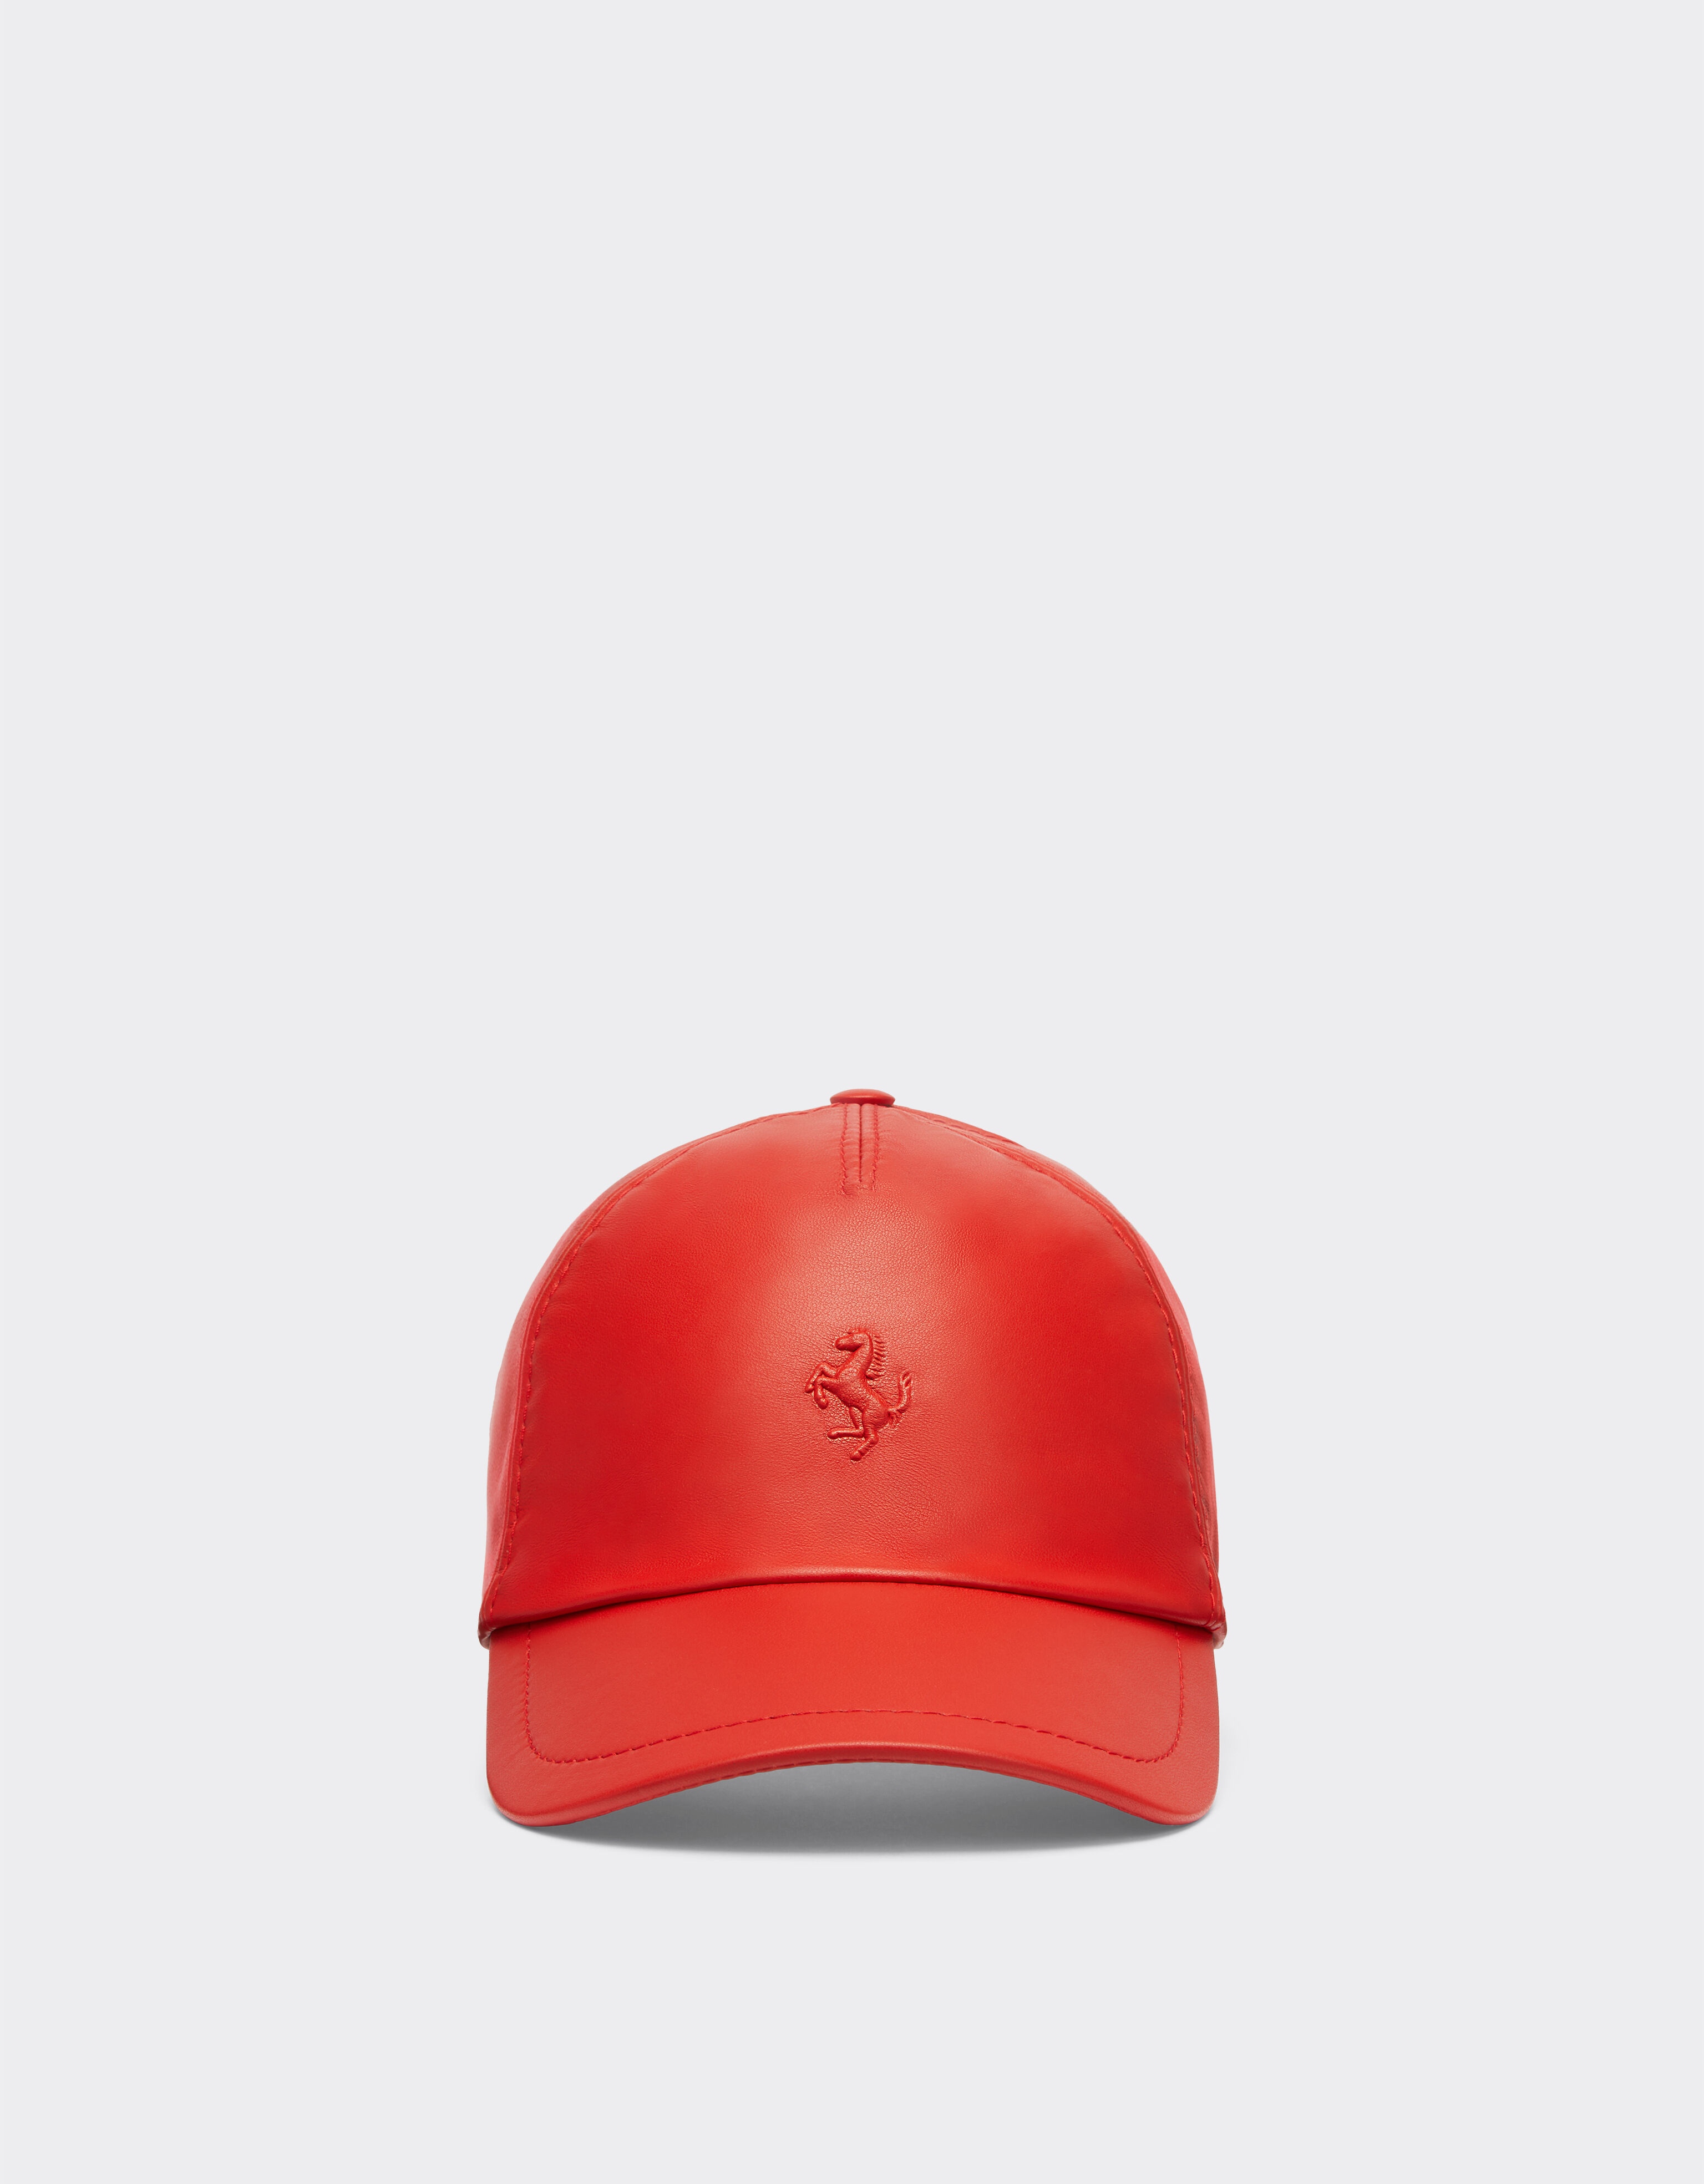 Ferrari Baseball cap with Prancing Horse logo Burgundy 20650f